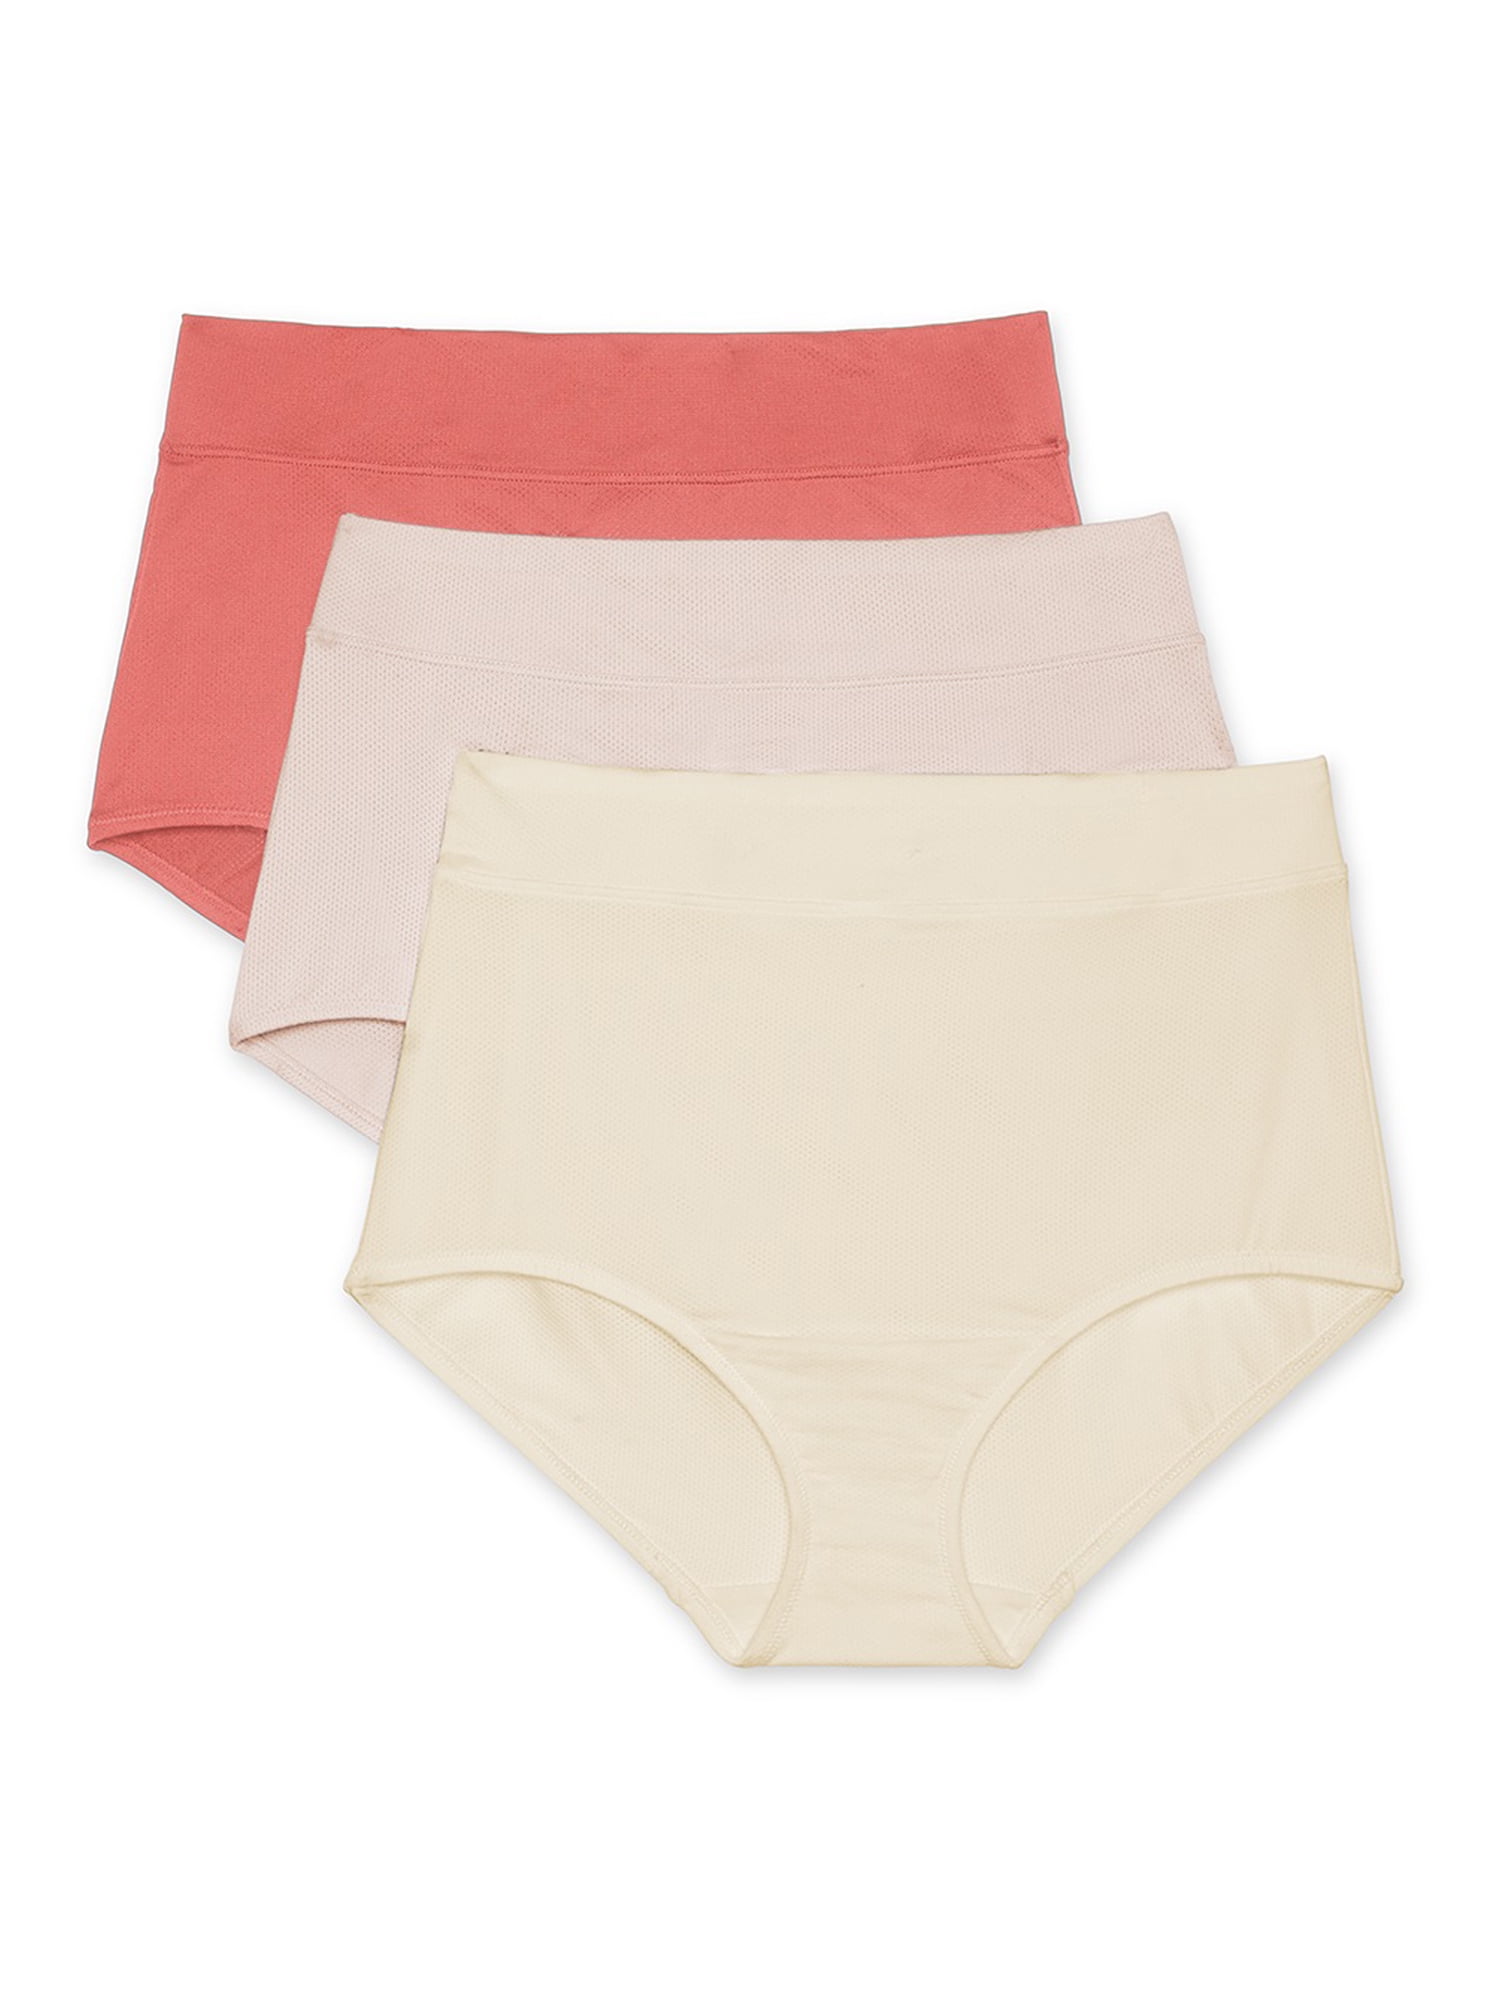 Warner's Polyester Blend Panties for Women